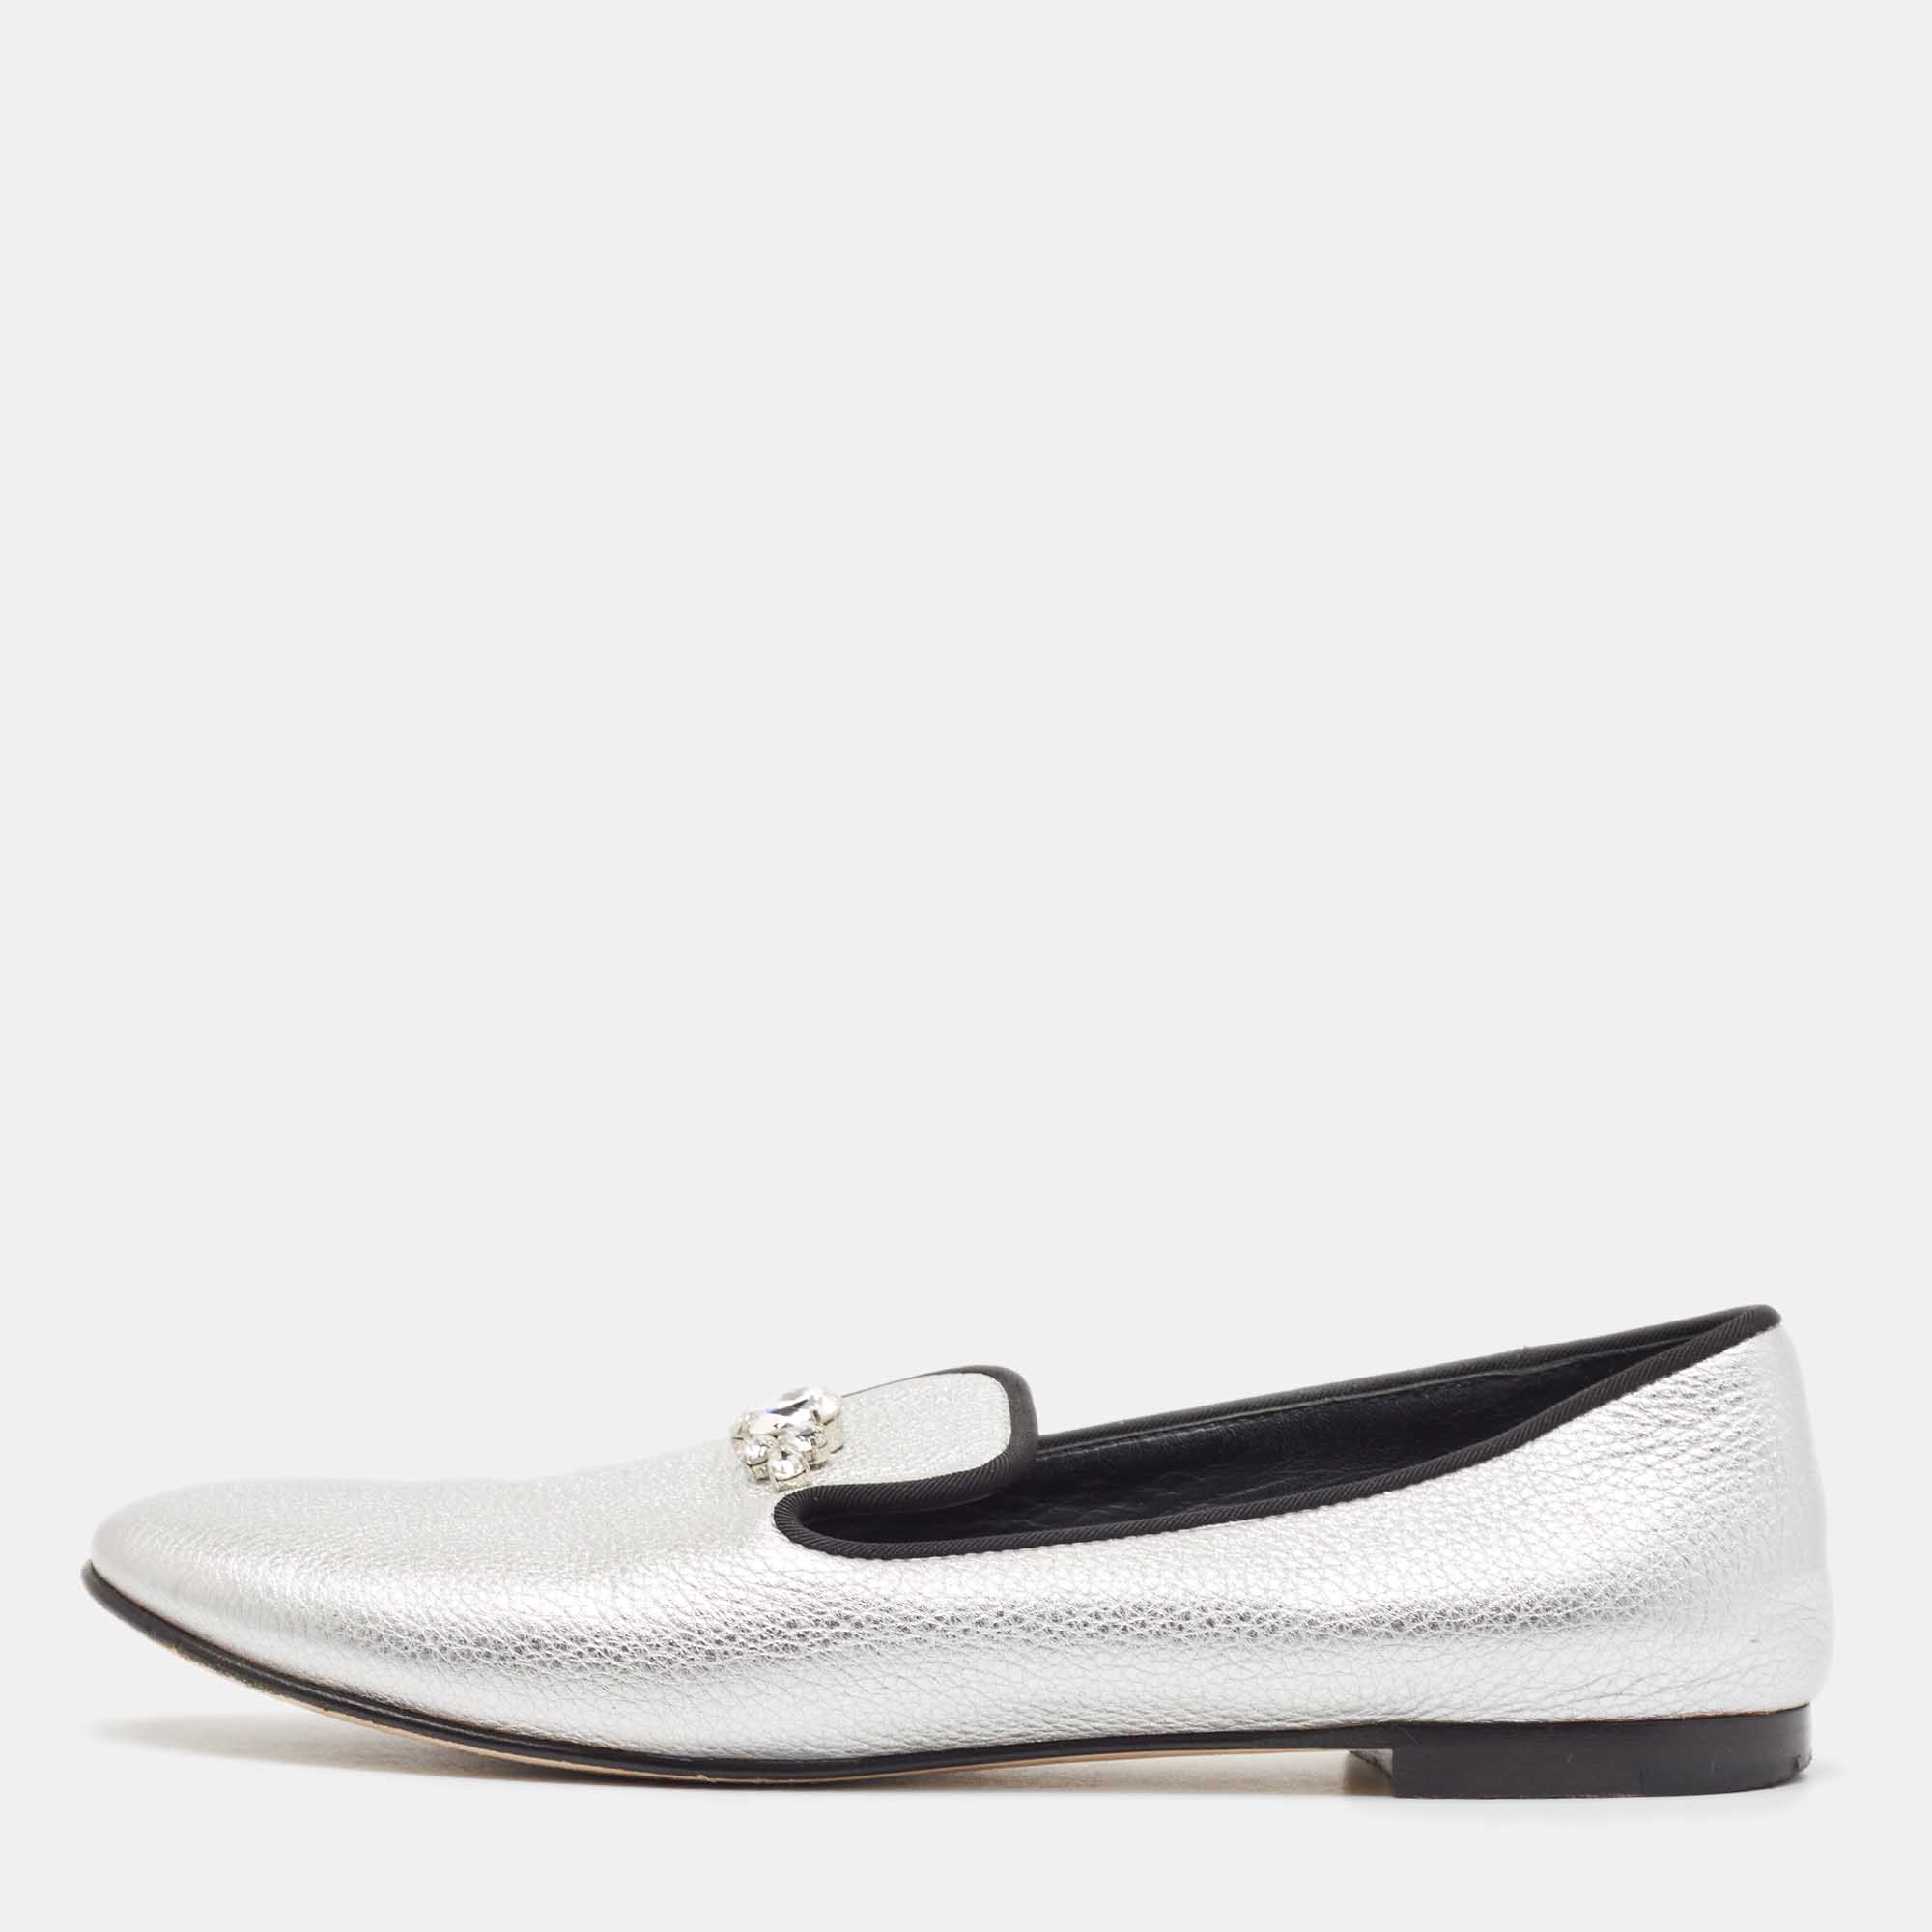 Giuseppe zanotti silver leather crystal embellished smoking slippers size 39